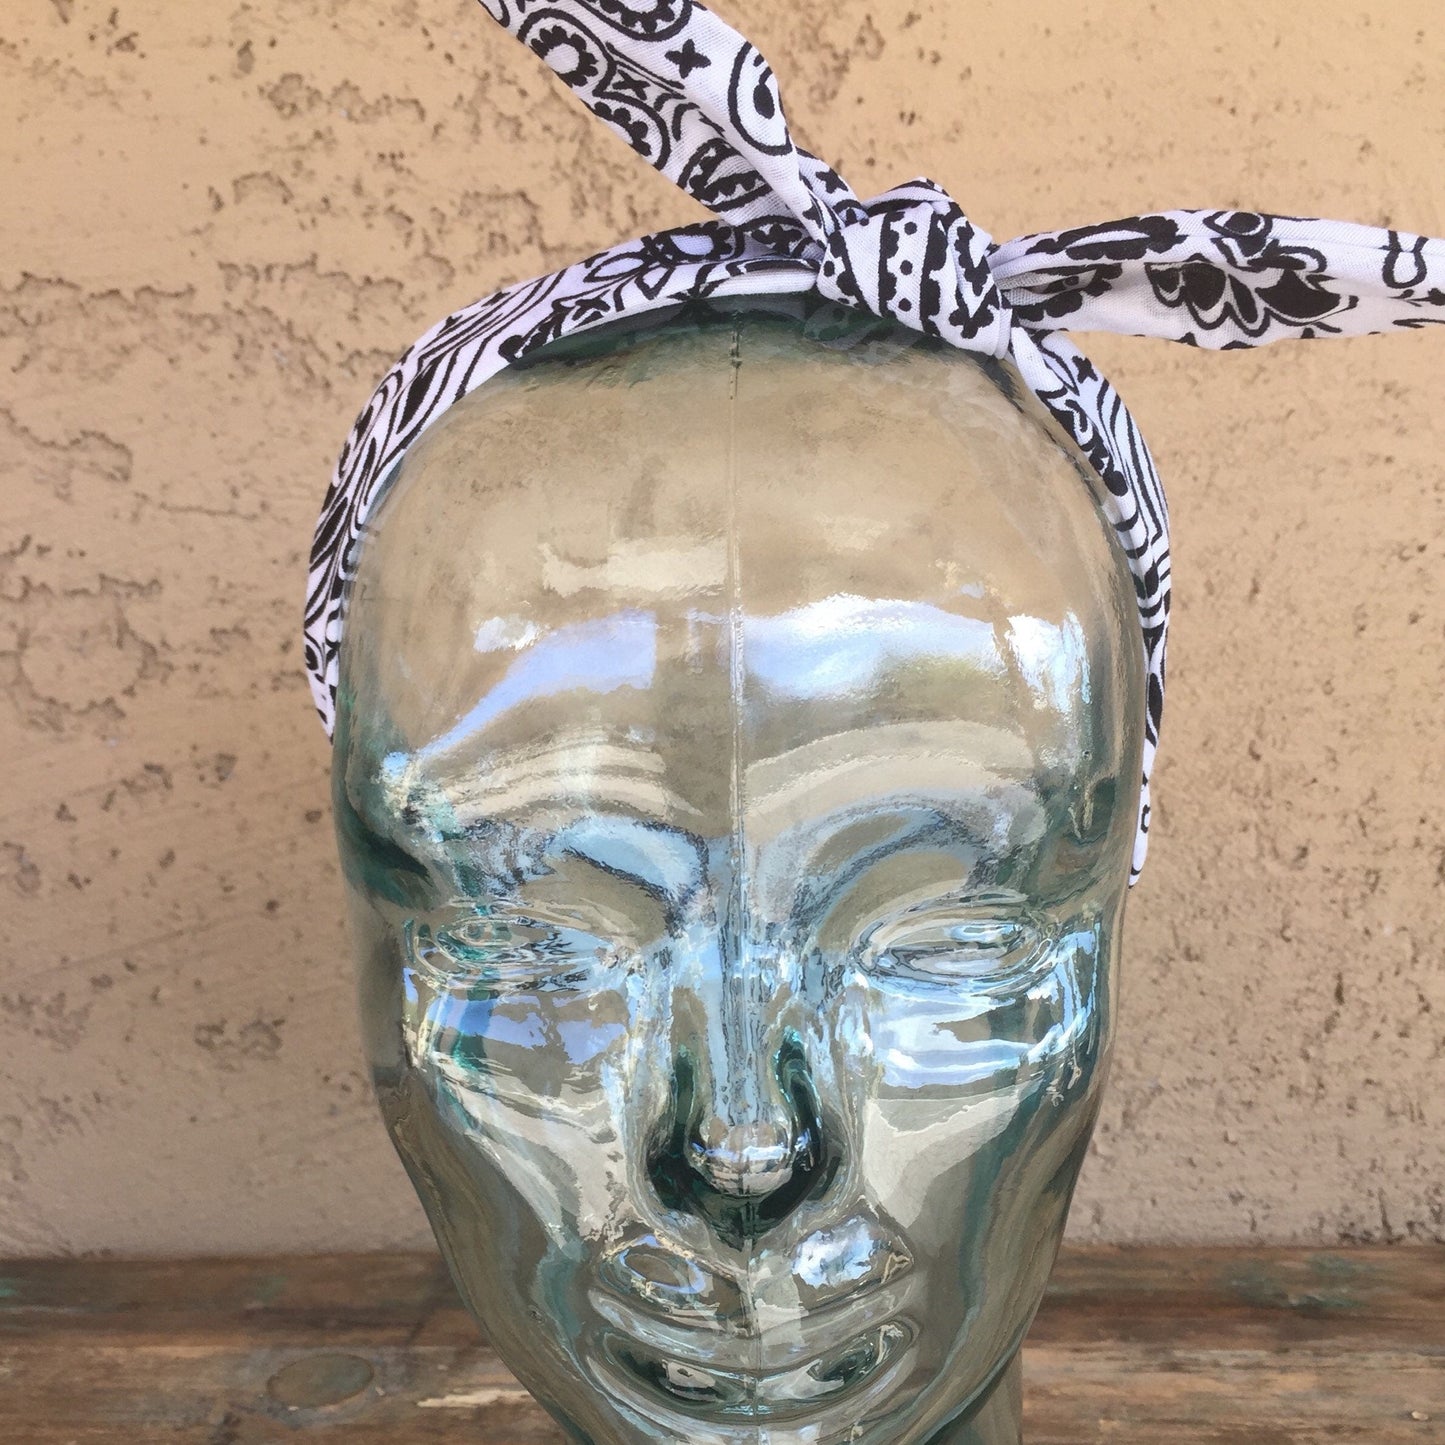 Traditional Paisley Bandana Elastic Head Wrap Headband